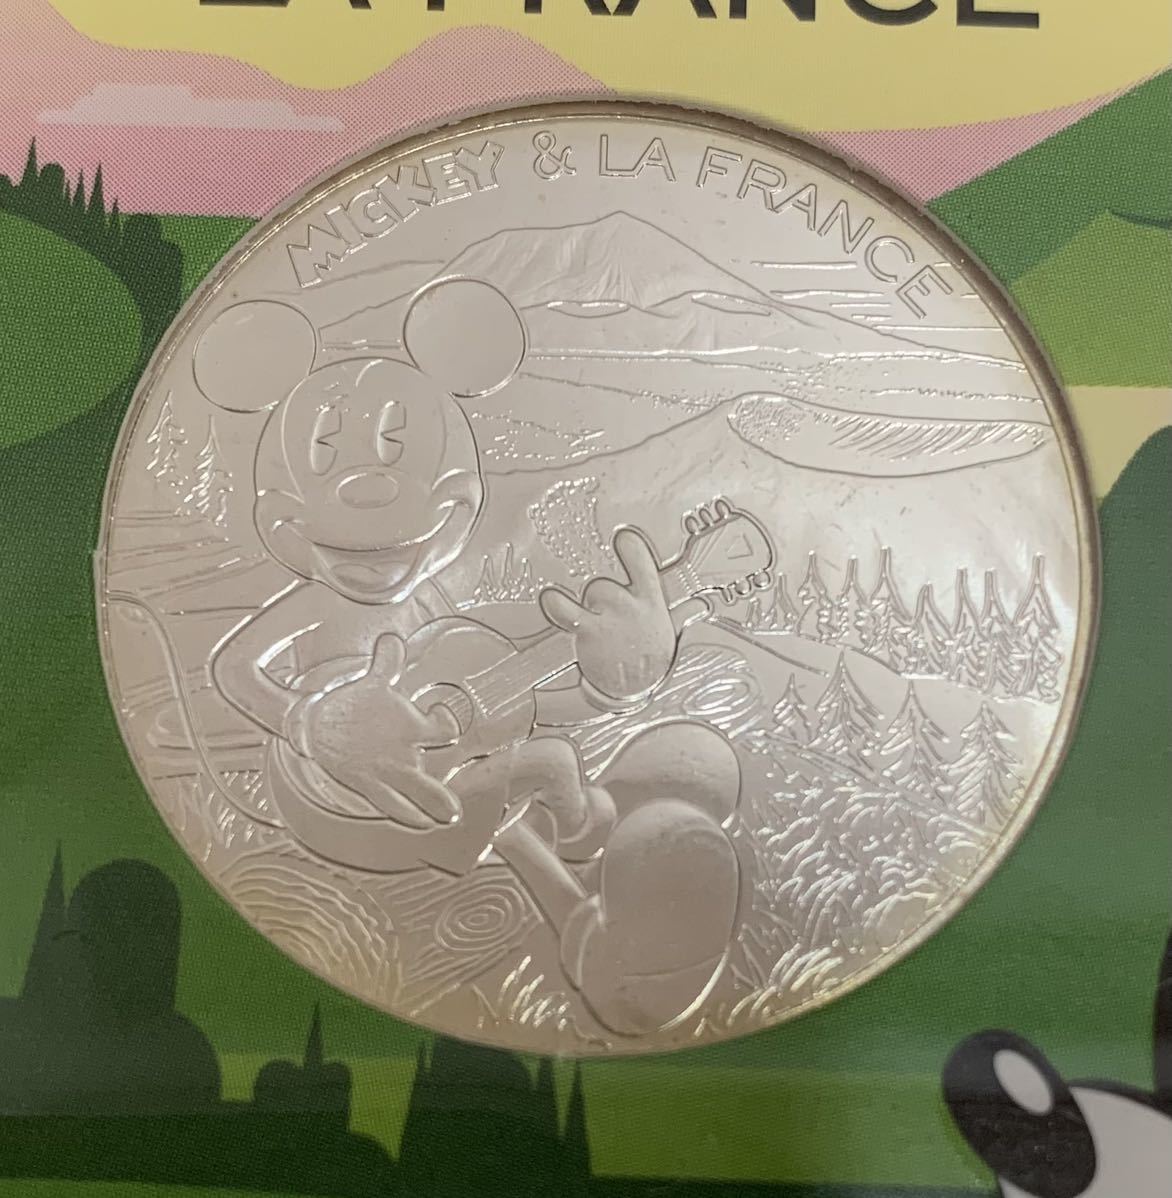 MICKEY＆LA FRANCE VOLCANS 10ユーロ 1枚 ミッキーマウス フランス硬貨 2018年 未使用・未開封 ⑯_画像3